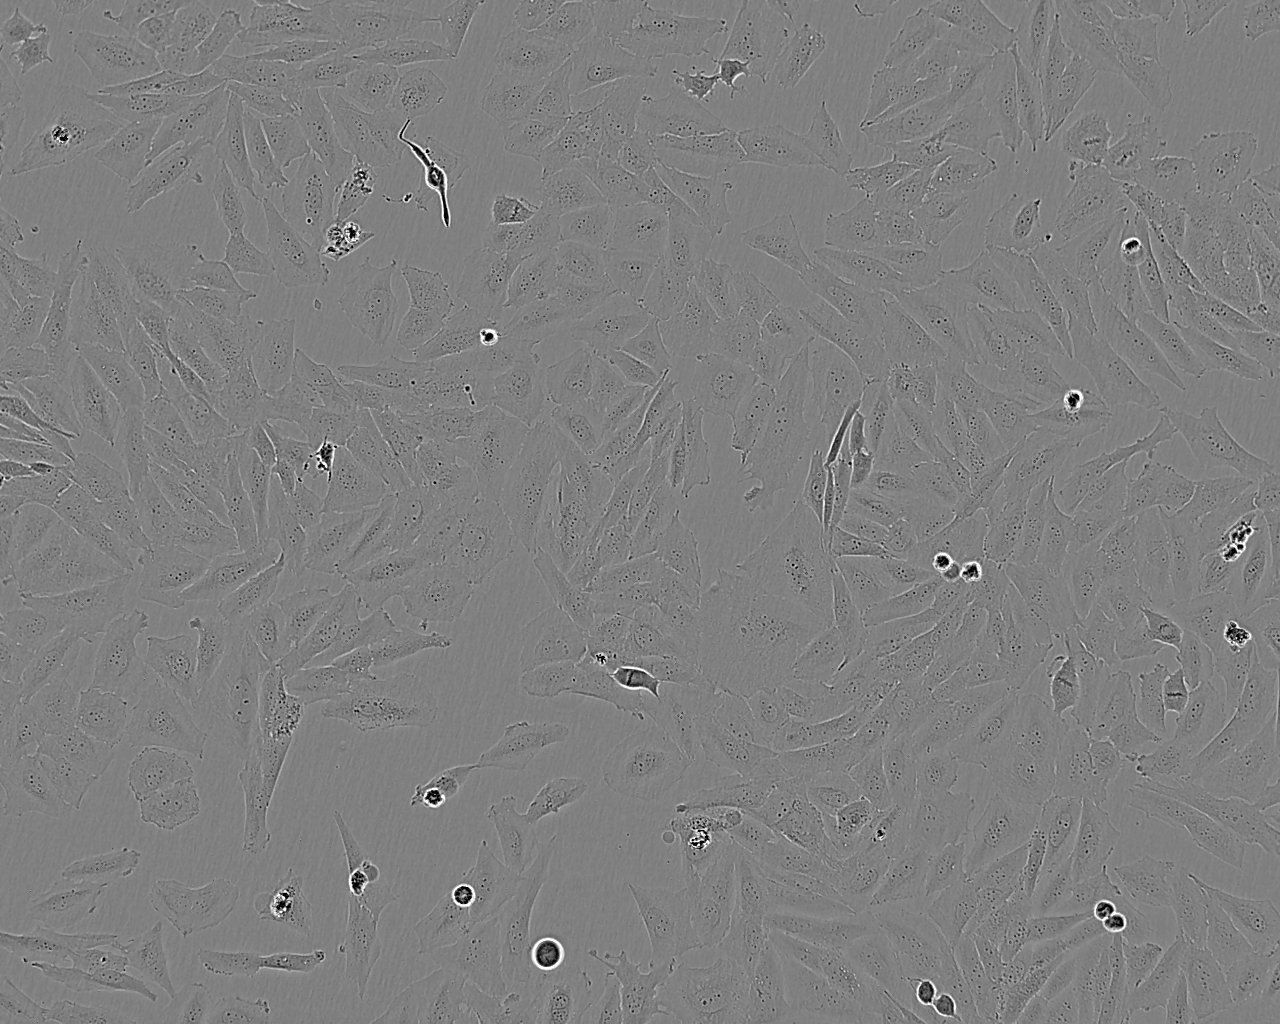 TE-6 Cells|人食管癌细胞系